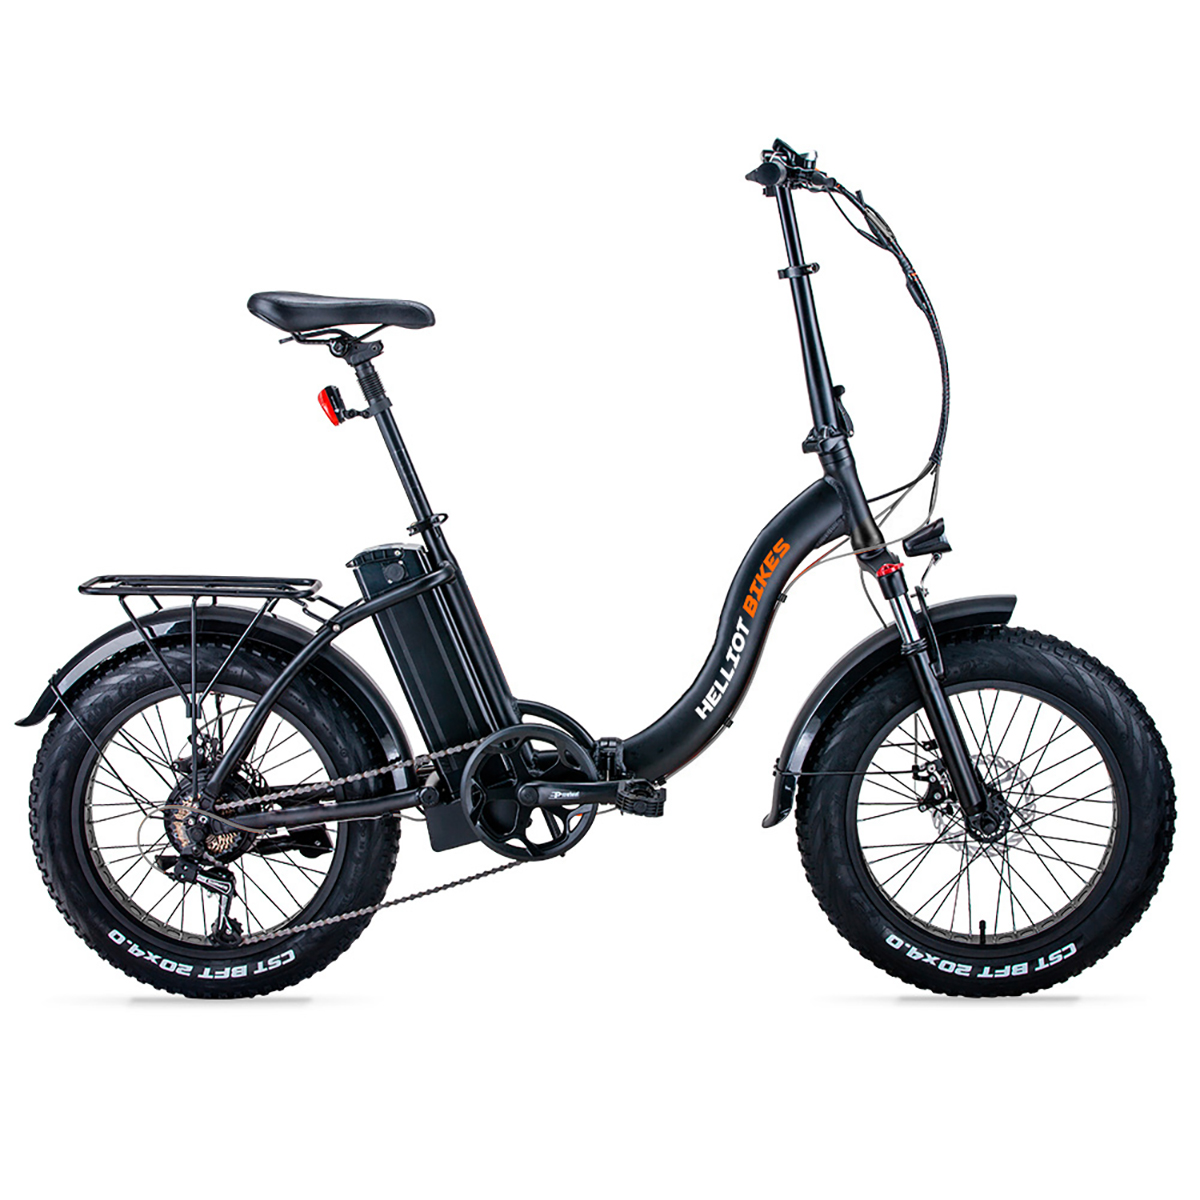 Bicicleta Negra Rsxi clover fitness plegable helliot rsix 36v 10ah 250w bikes ruedas fat de 20 pulgadas autonomía hasta 45